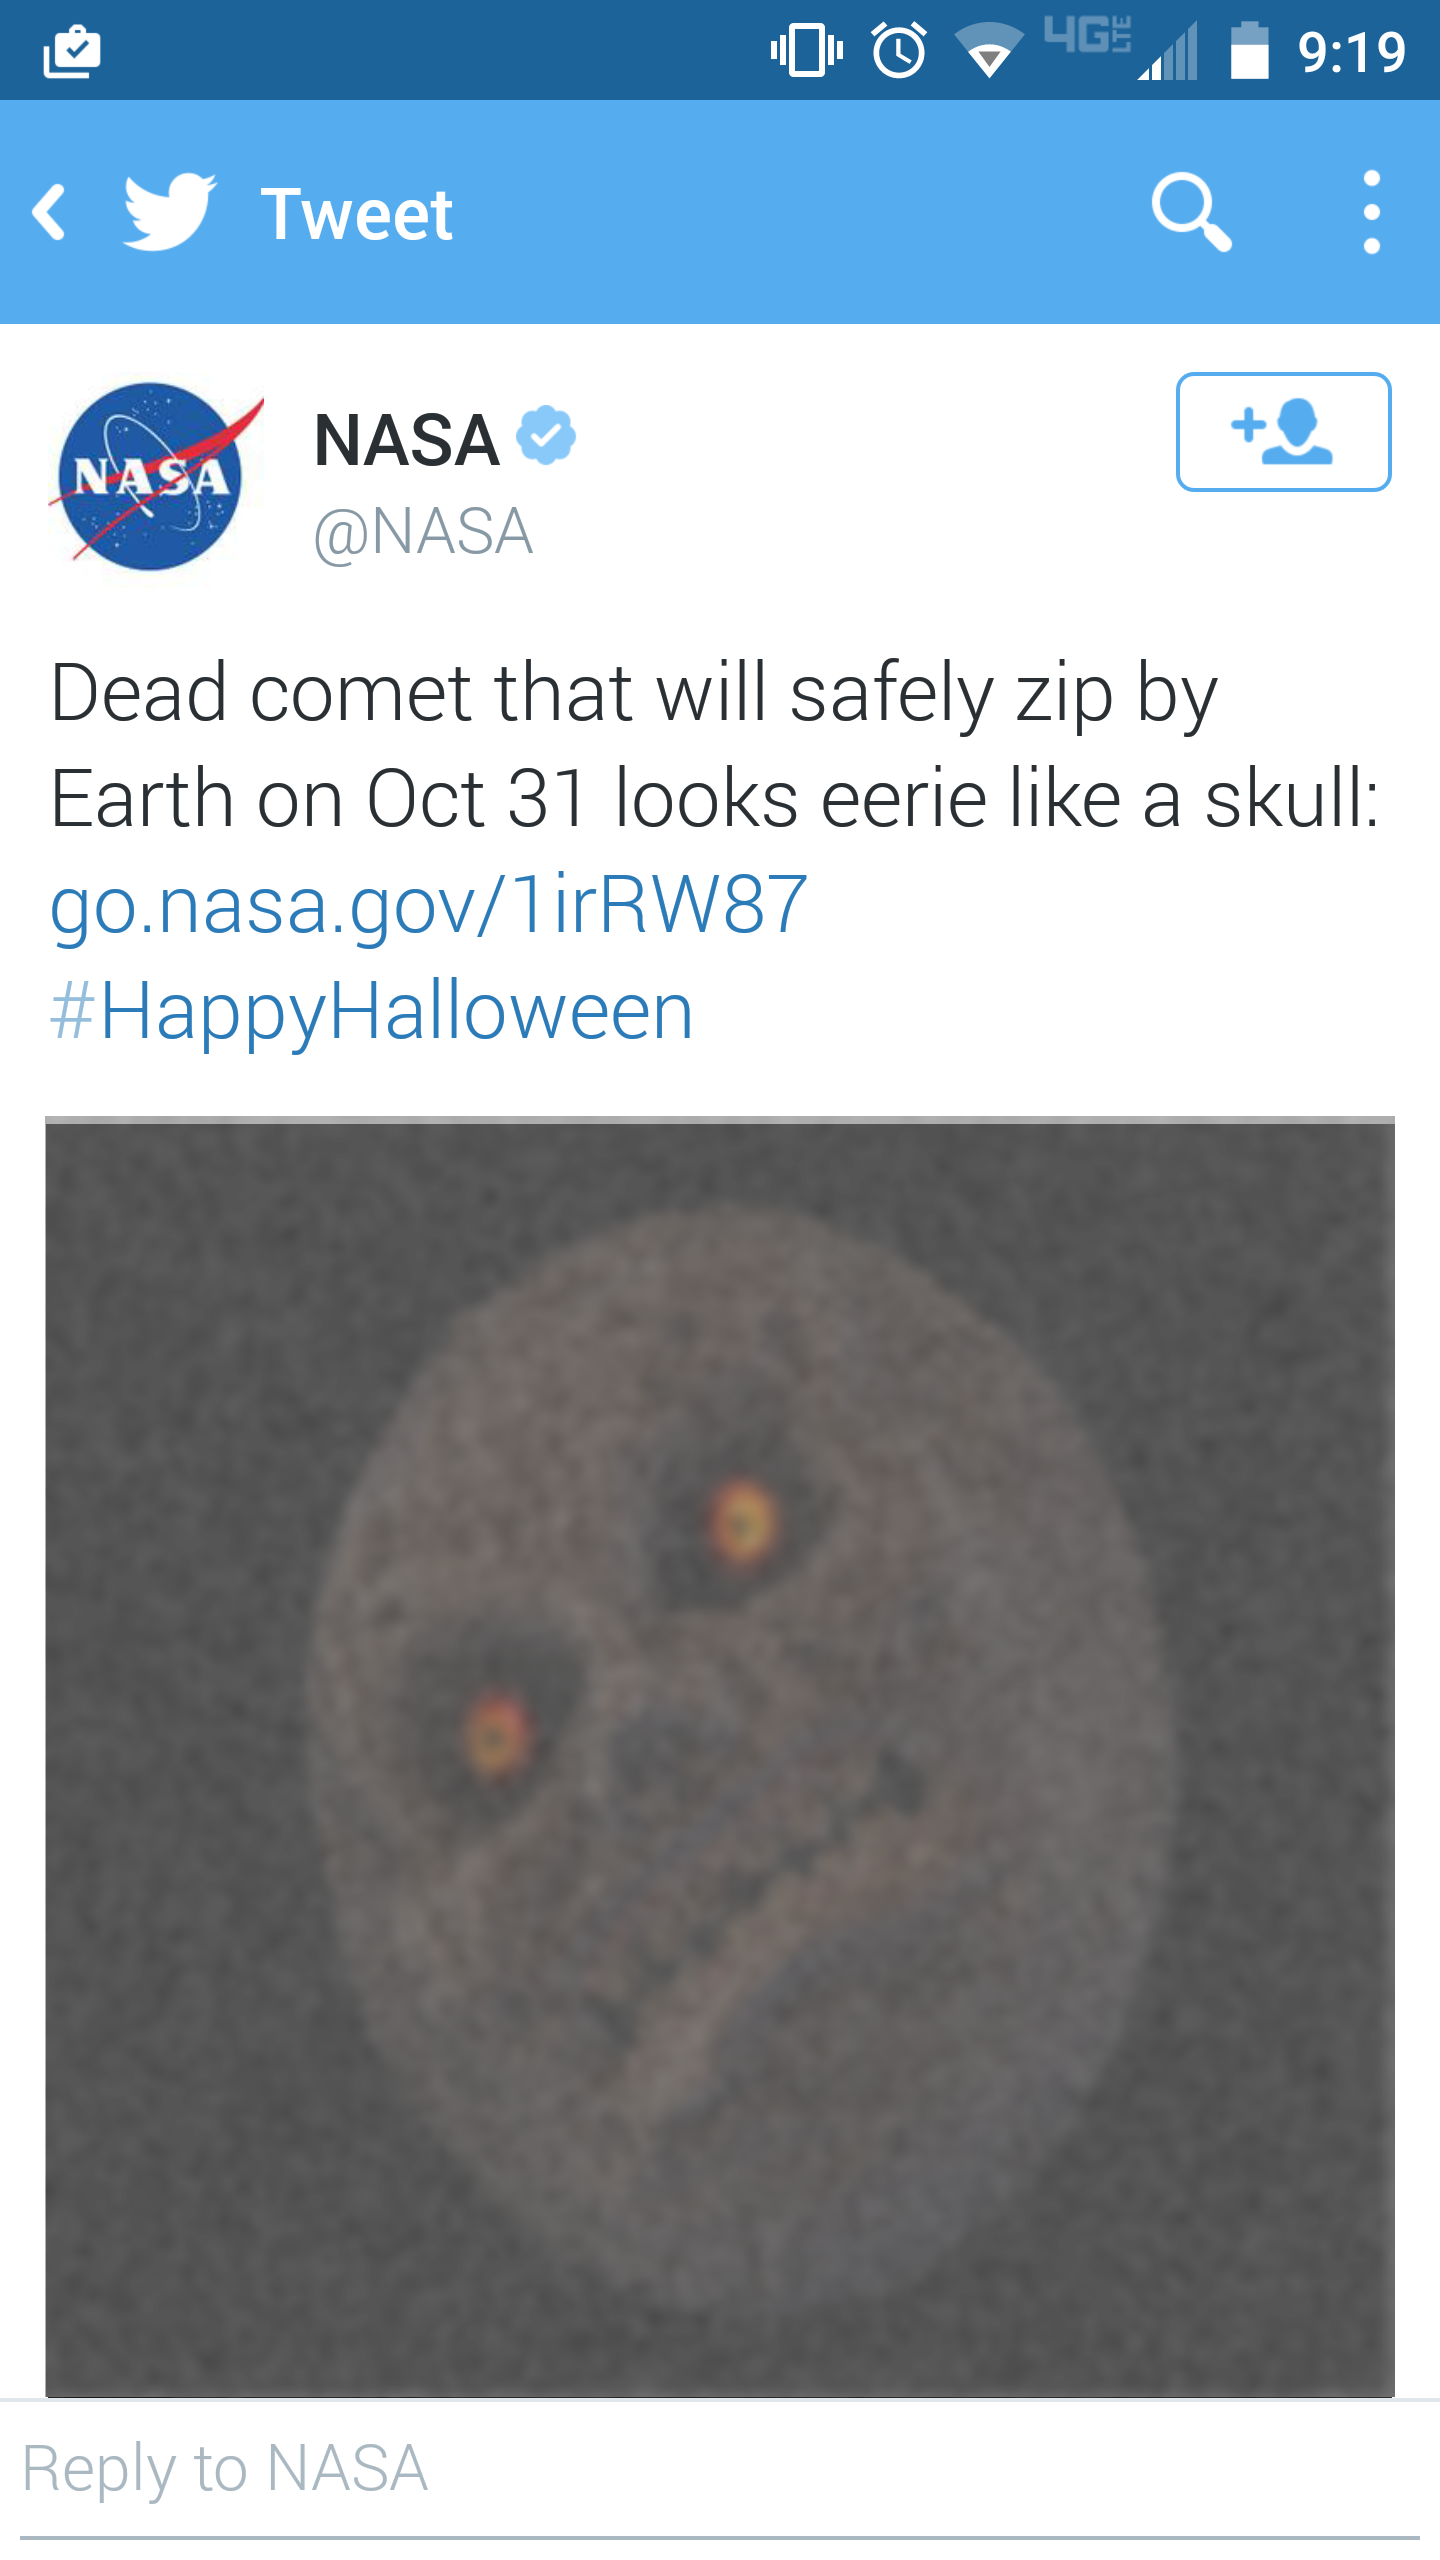 screenshot - 004. y Tweet Nasa Nasa Dead comet that will safely zip by Earth on Oct 31 looks eerie a skull go.nasa.govlirRW87 Halloween to Nasa